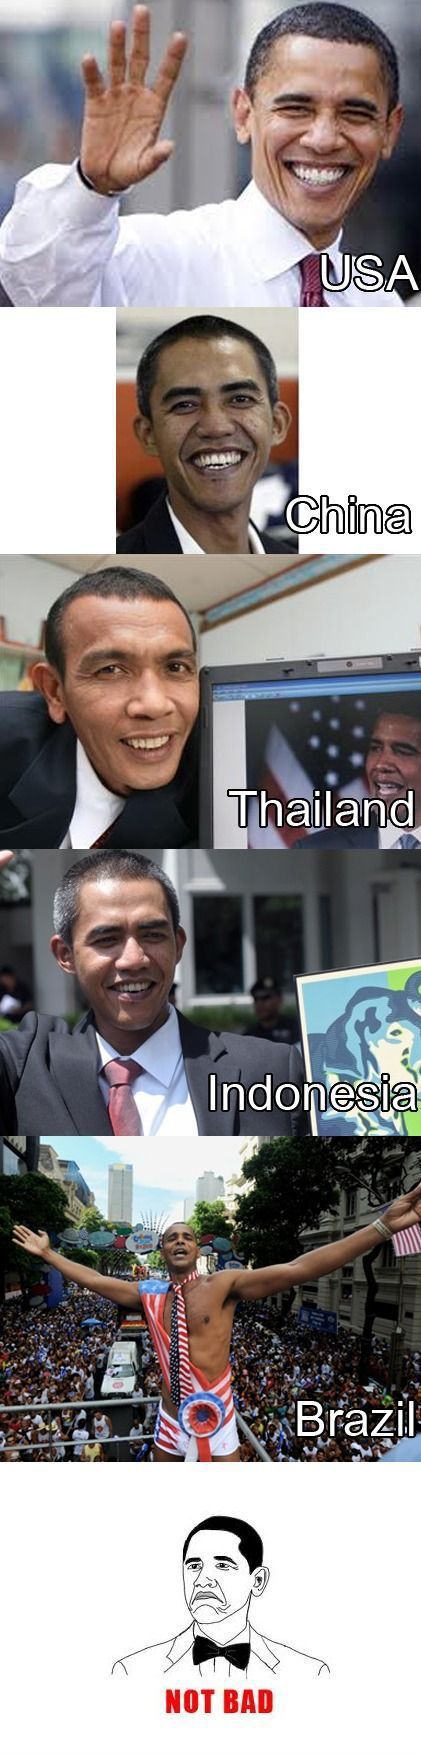 Obama worldwide